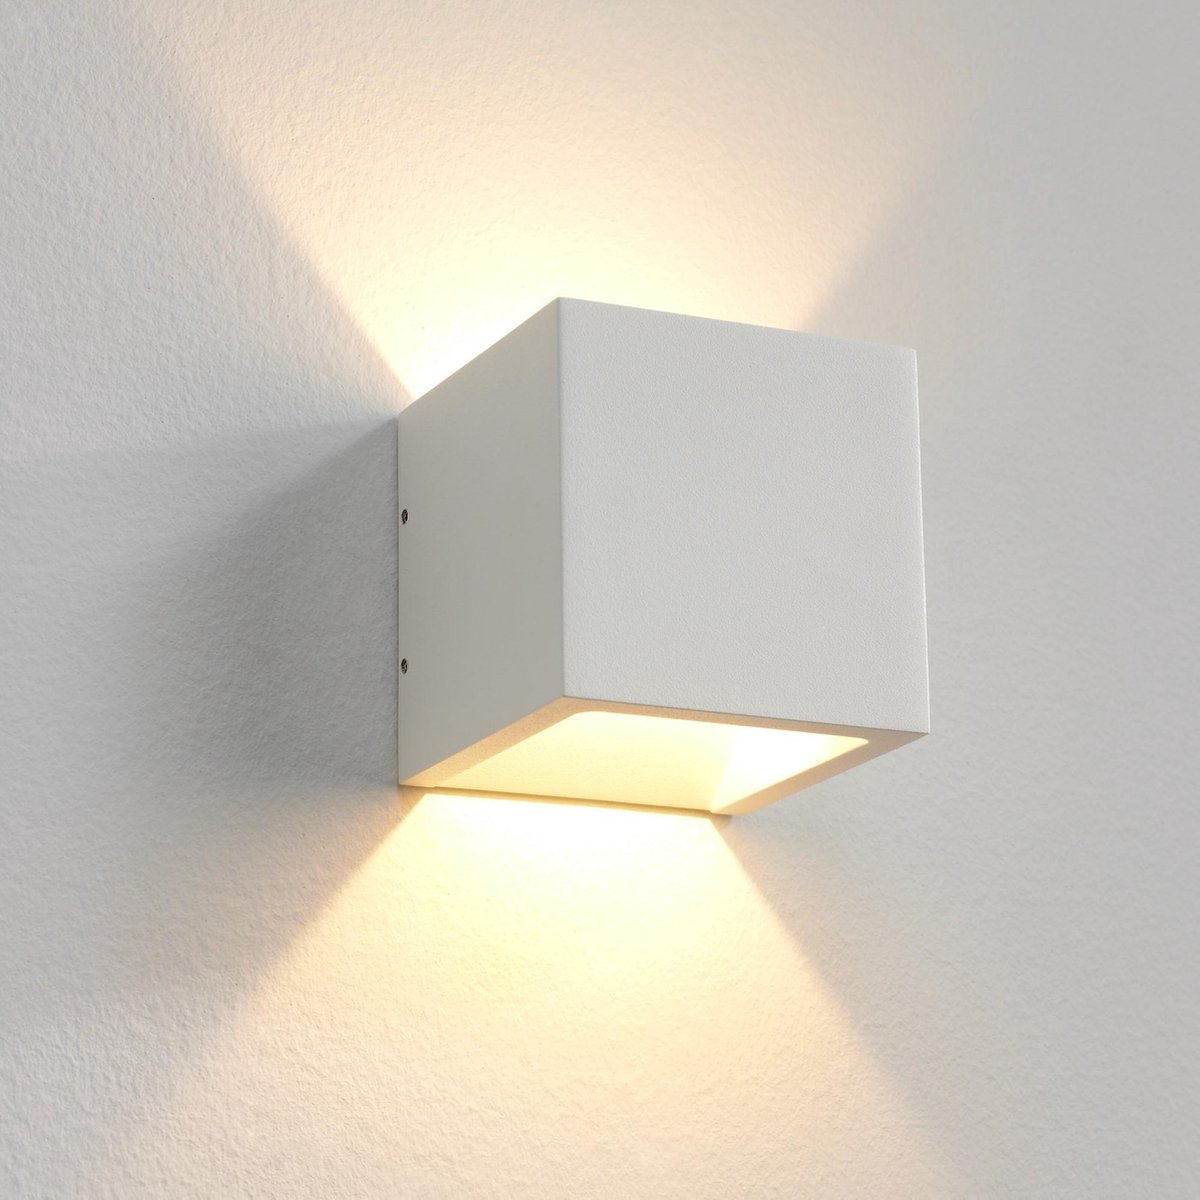 Wandlamp Cube Wit - 10x10x10cm - LED 6W 2700K 696lm - IP54 - Dimbaar > wandlamp binnen wit | wandlamp buiten wit | wandlamp wit | buitenlamp wit | muurlamp wit | led lamp wit | sfeer lamp wit | design lamp wit